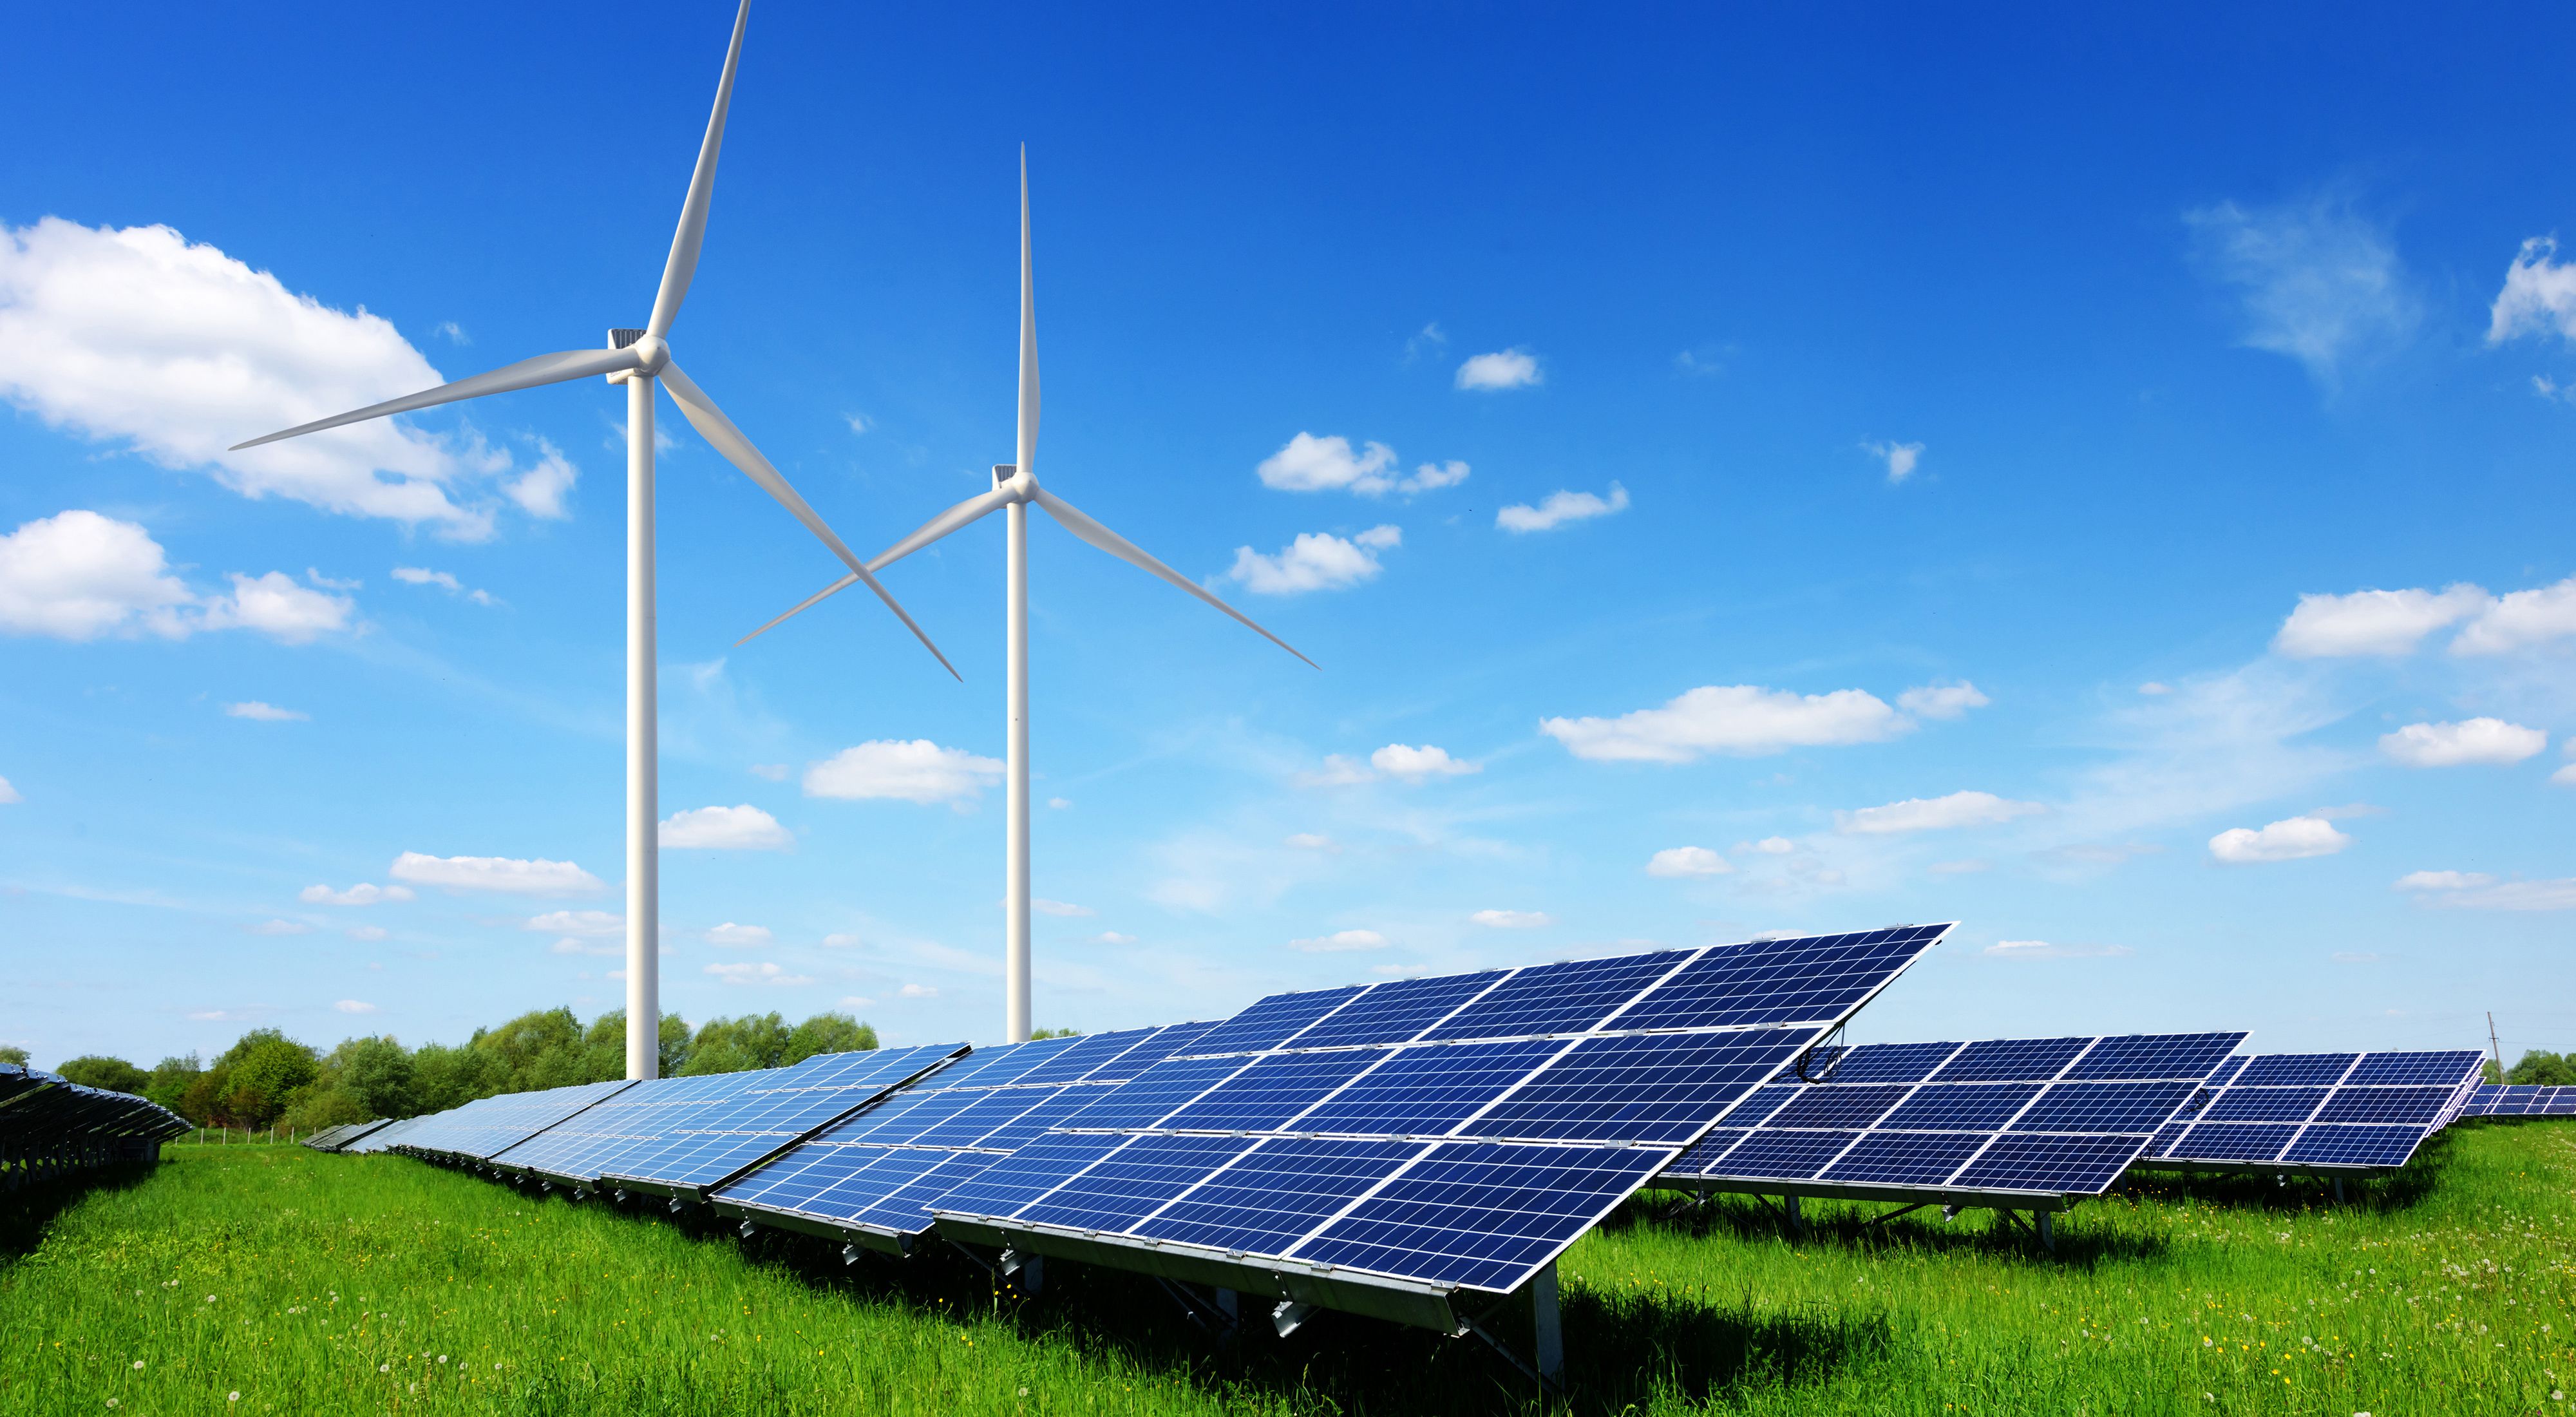 Wisconsin's Renewable Energy Future